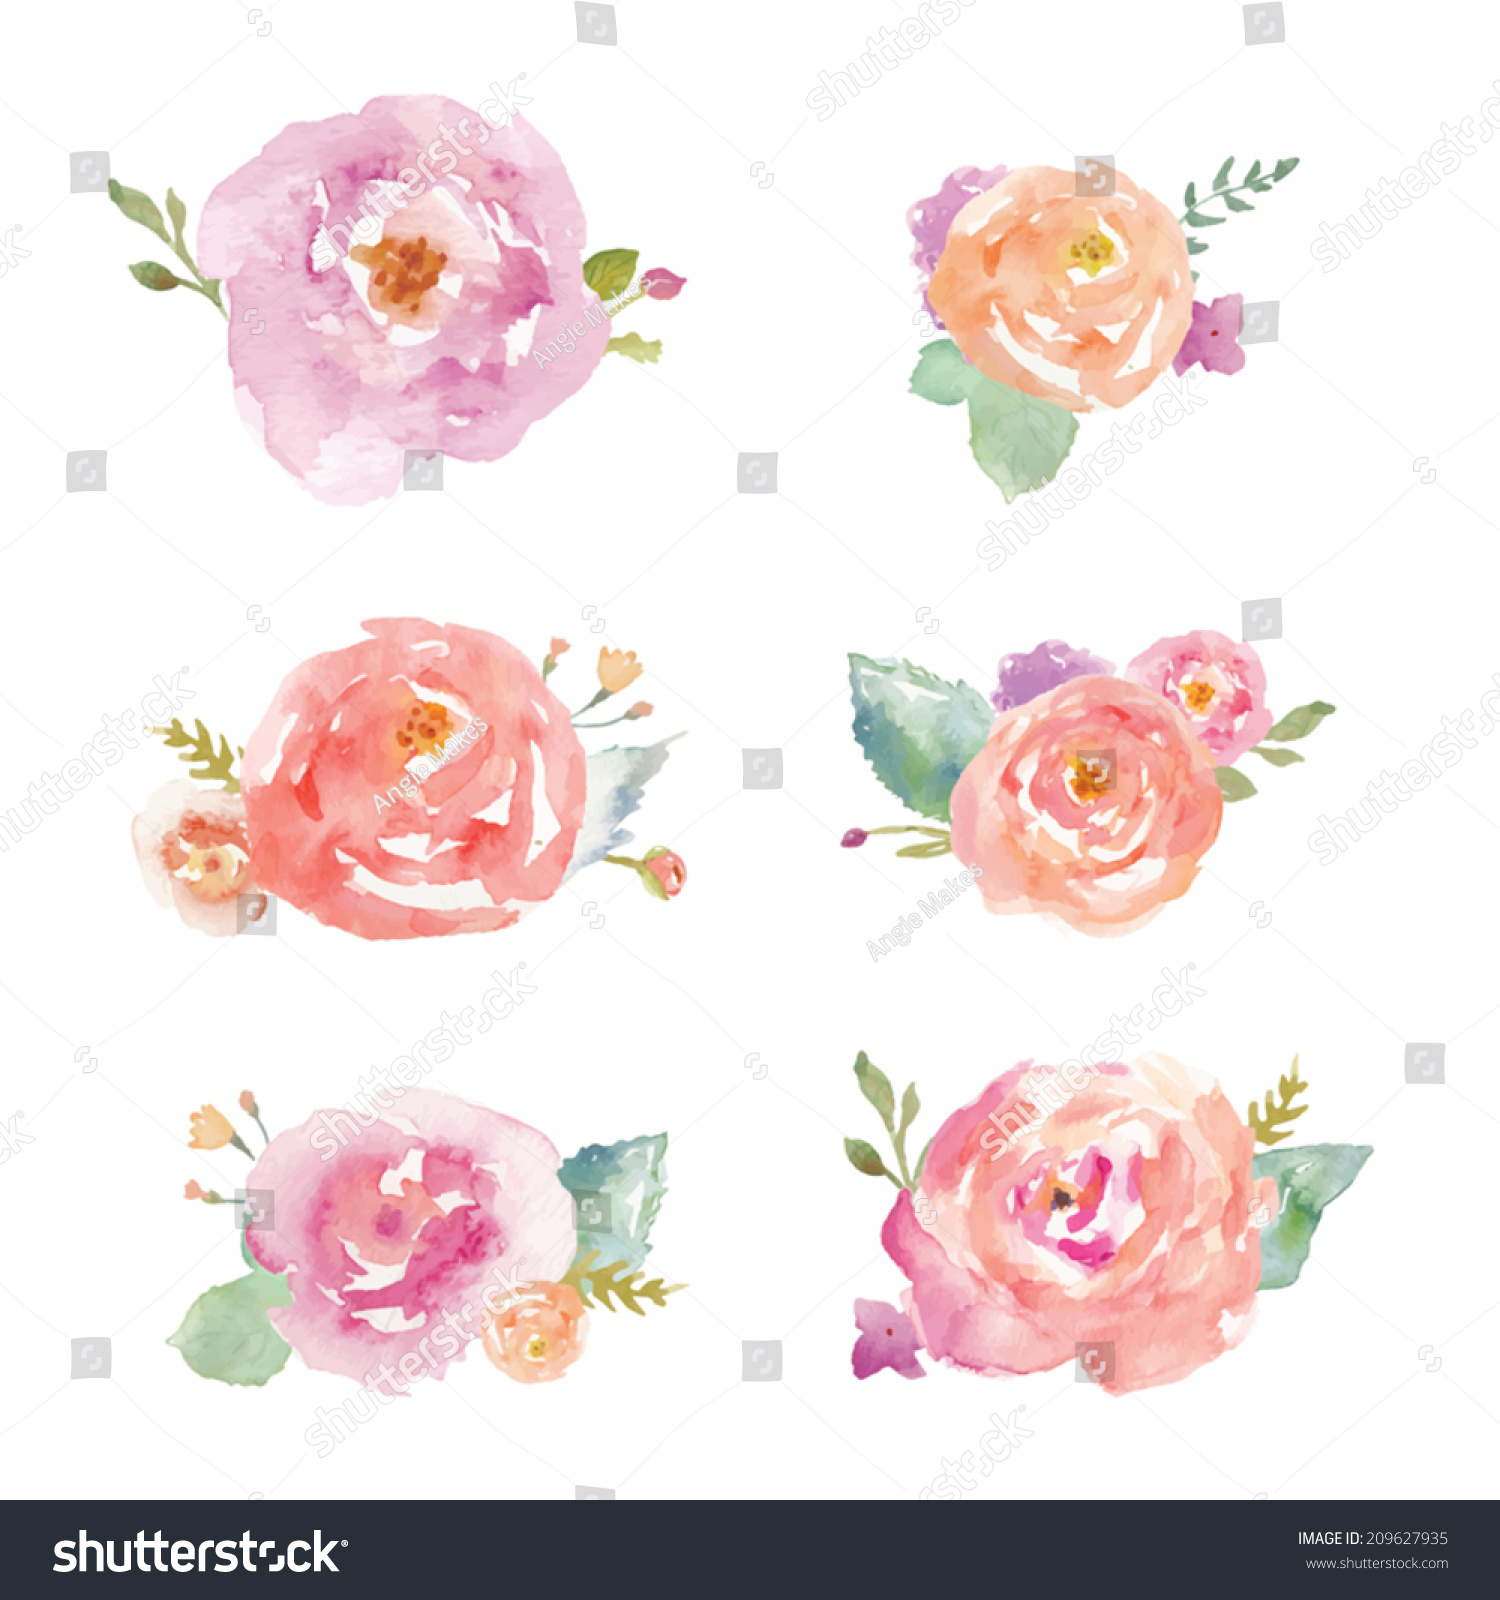 Watercolor Roses Vector. Watercolor Flower Bouquet Vector - 209627935 ...